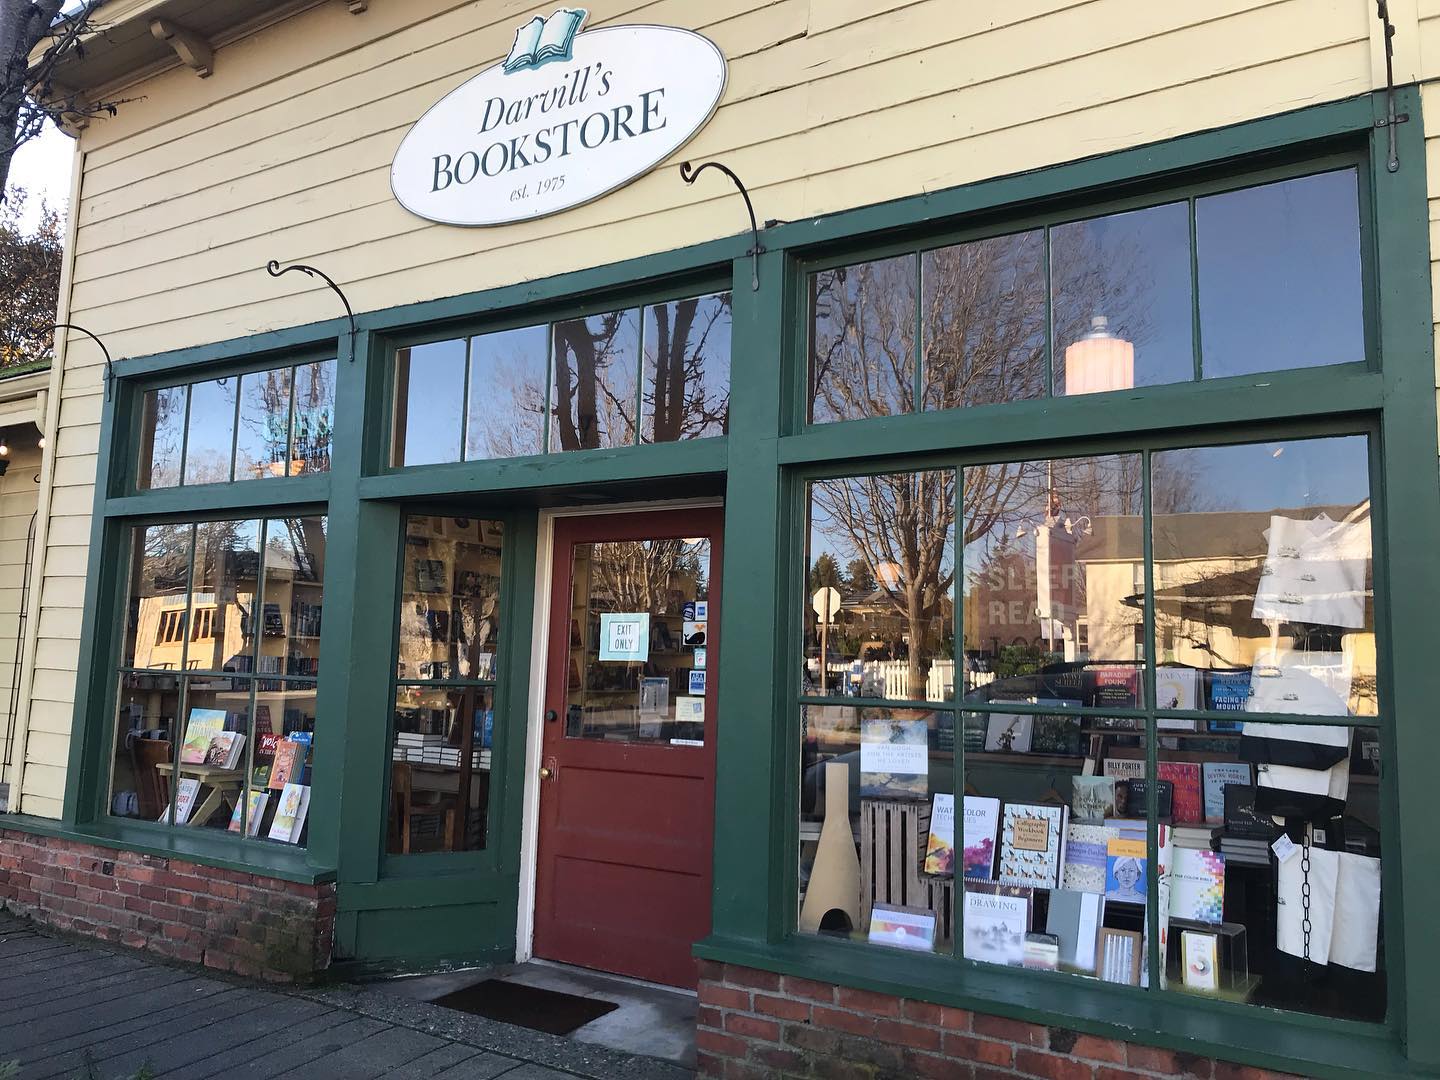 Darvill's Bookstore exterior